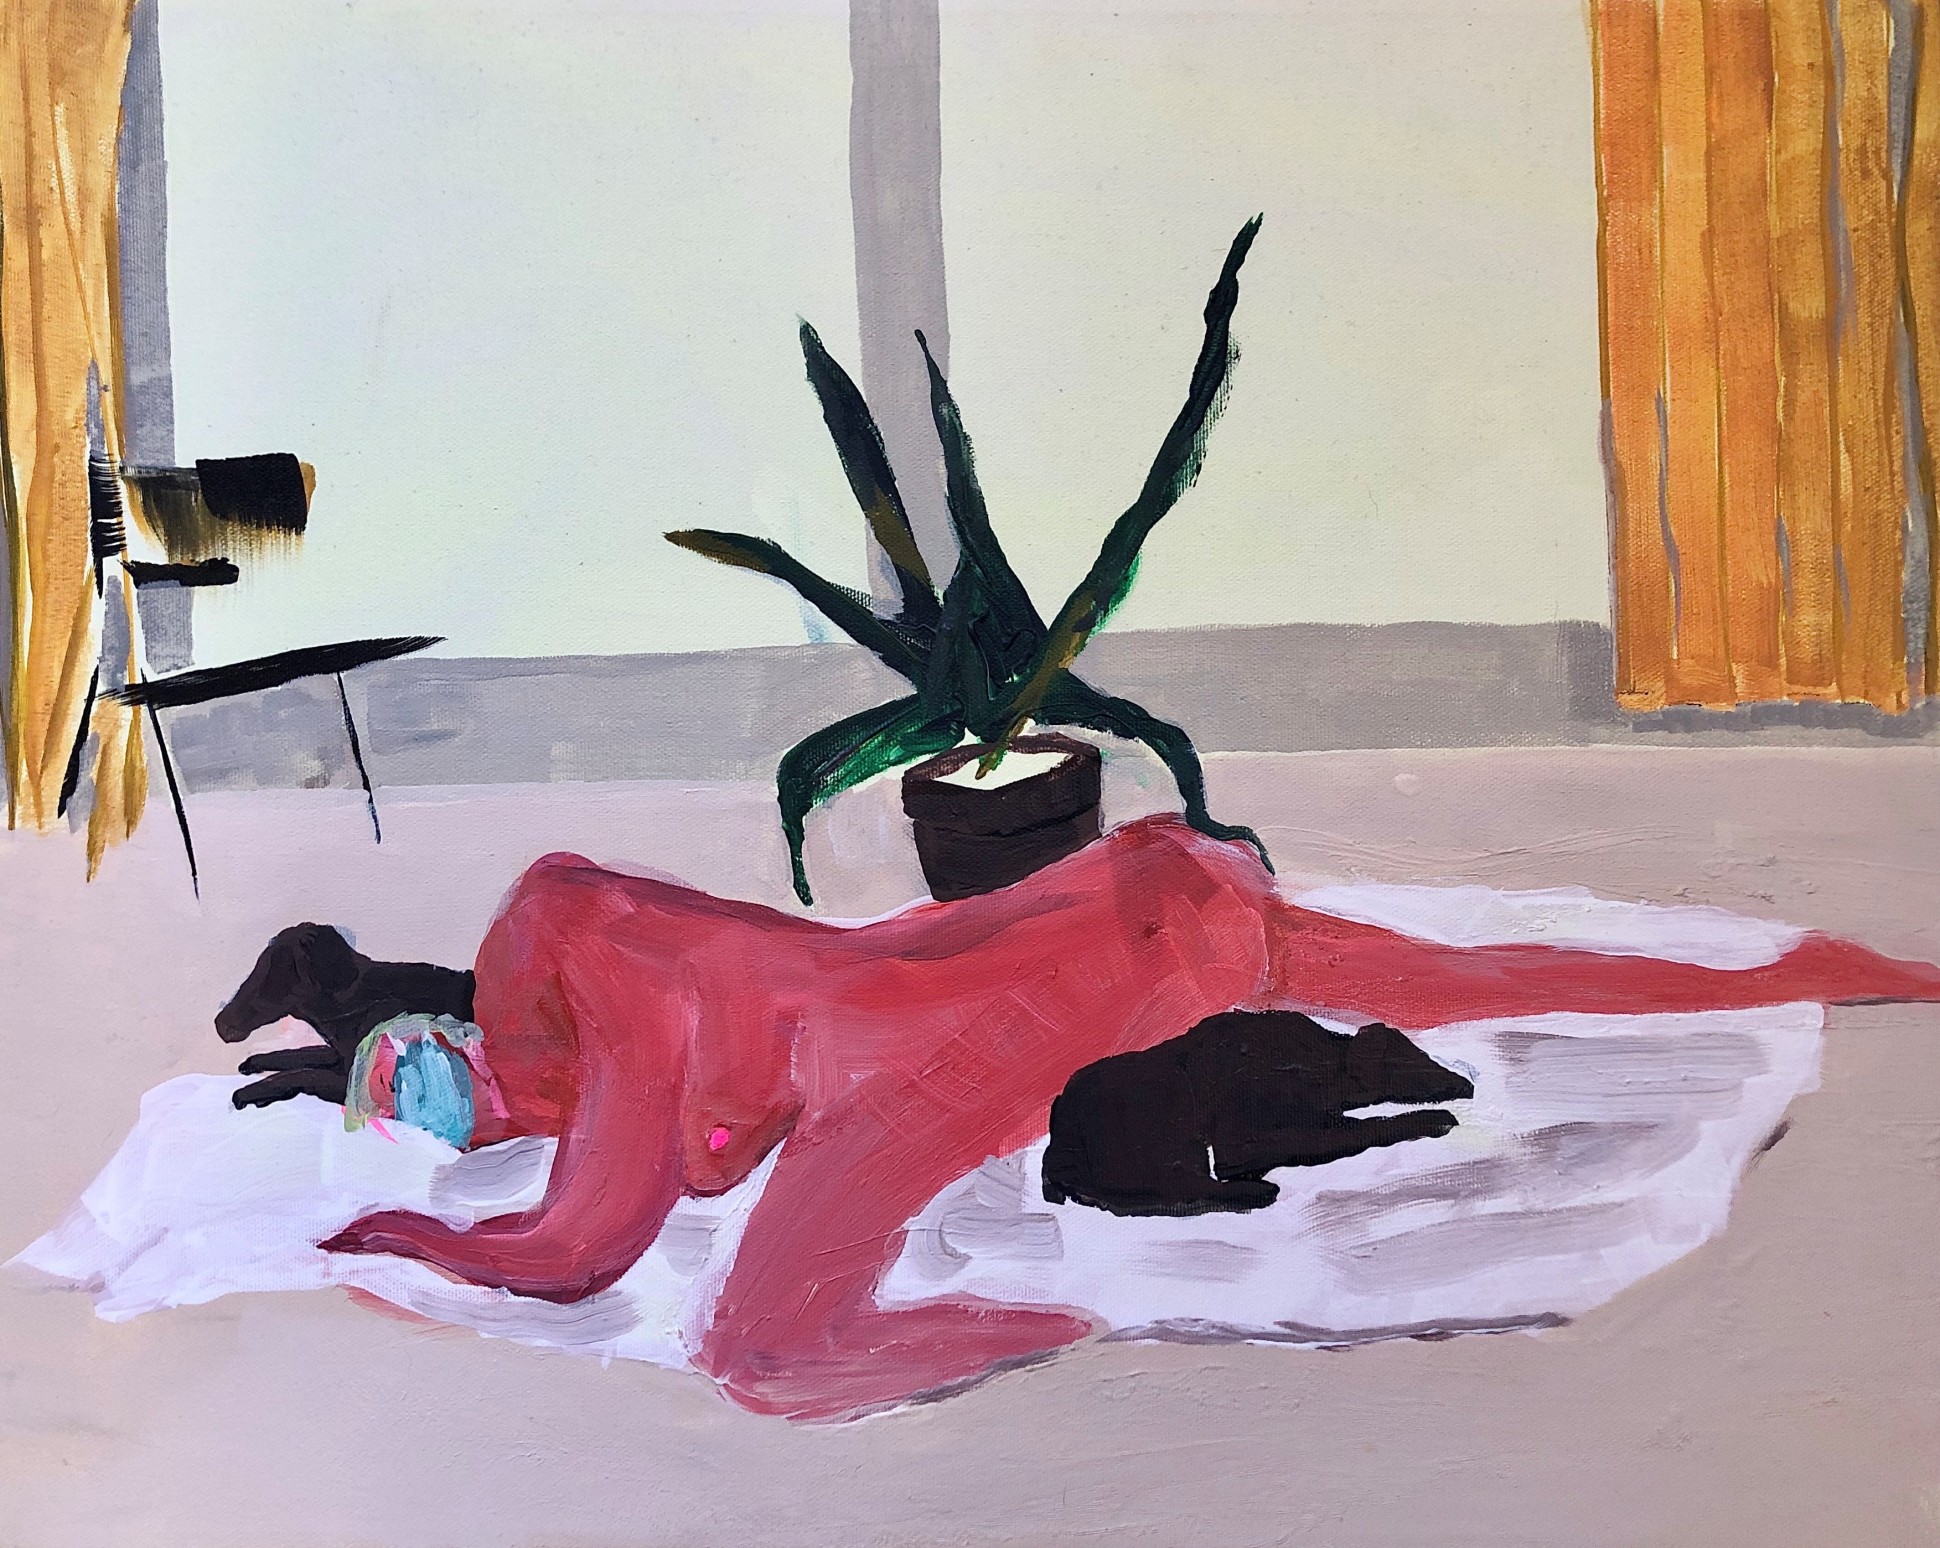 Grace Metzler Quarantine Dreamer, 2020 Oil on Canvas 40.5 x 51 cm. / 16 x 20 in. © Grace Metzler, Courtesy Yossi Milo Gallery, New York